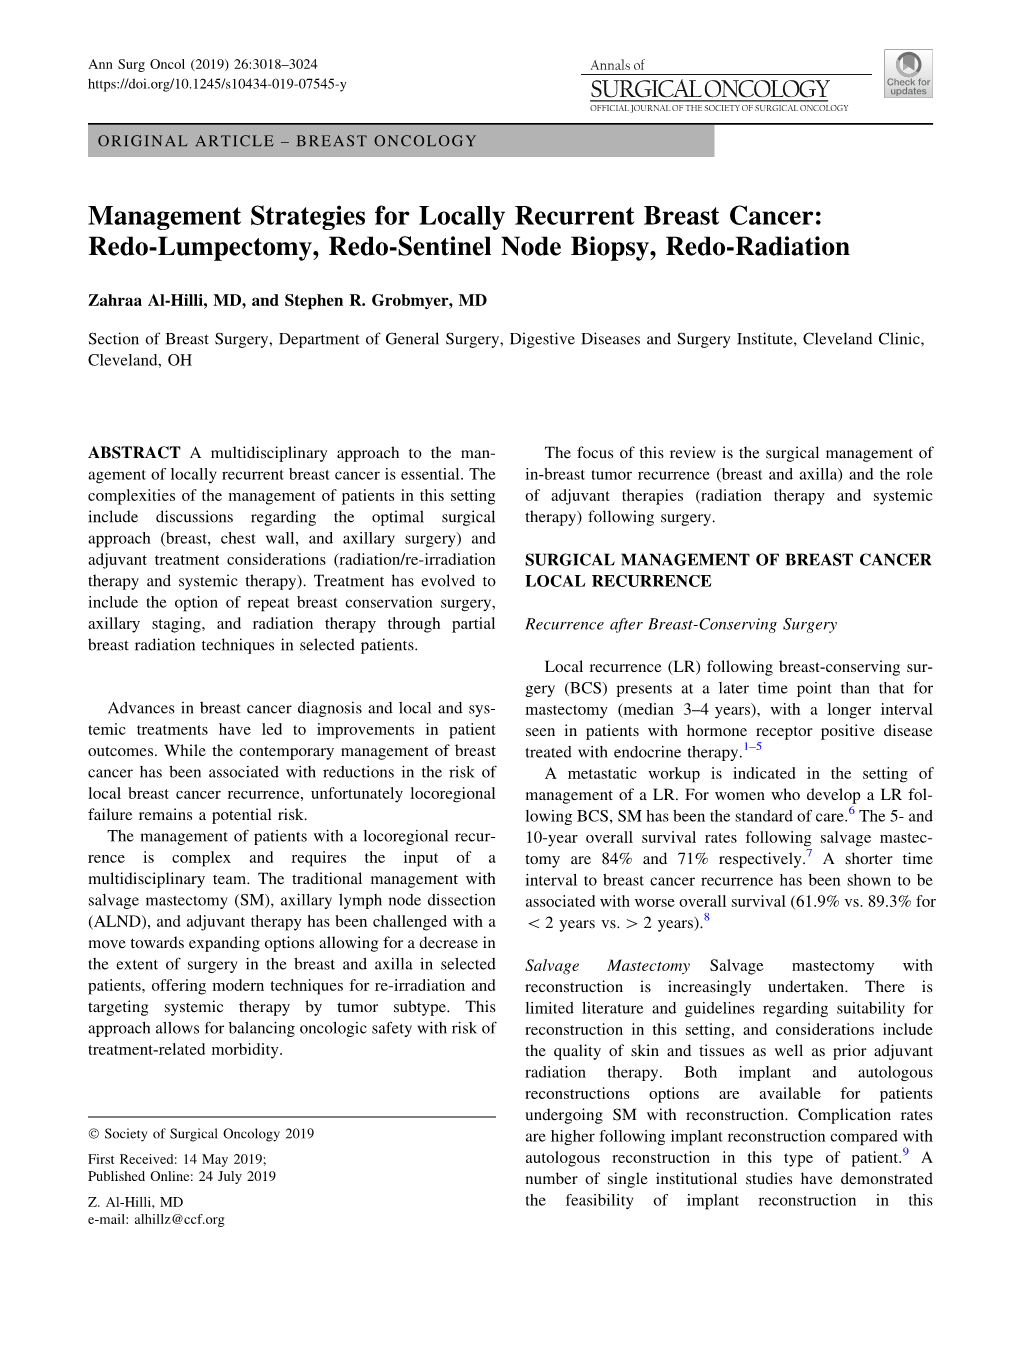 Management Strategies for Locally Recurrent Breast Cancer: Redo-Lumpectomy, Redo-Sentinel Node Biopsy, Redo-Radiation